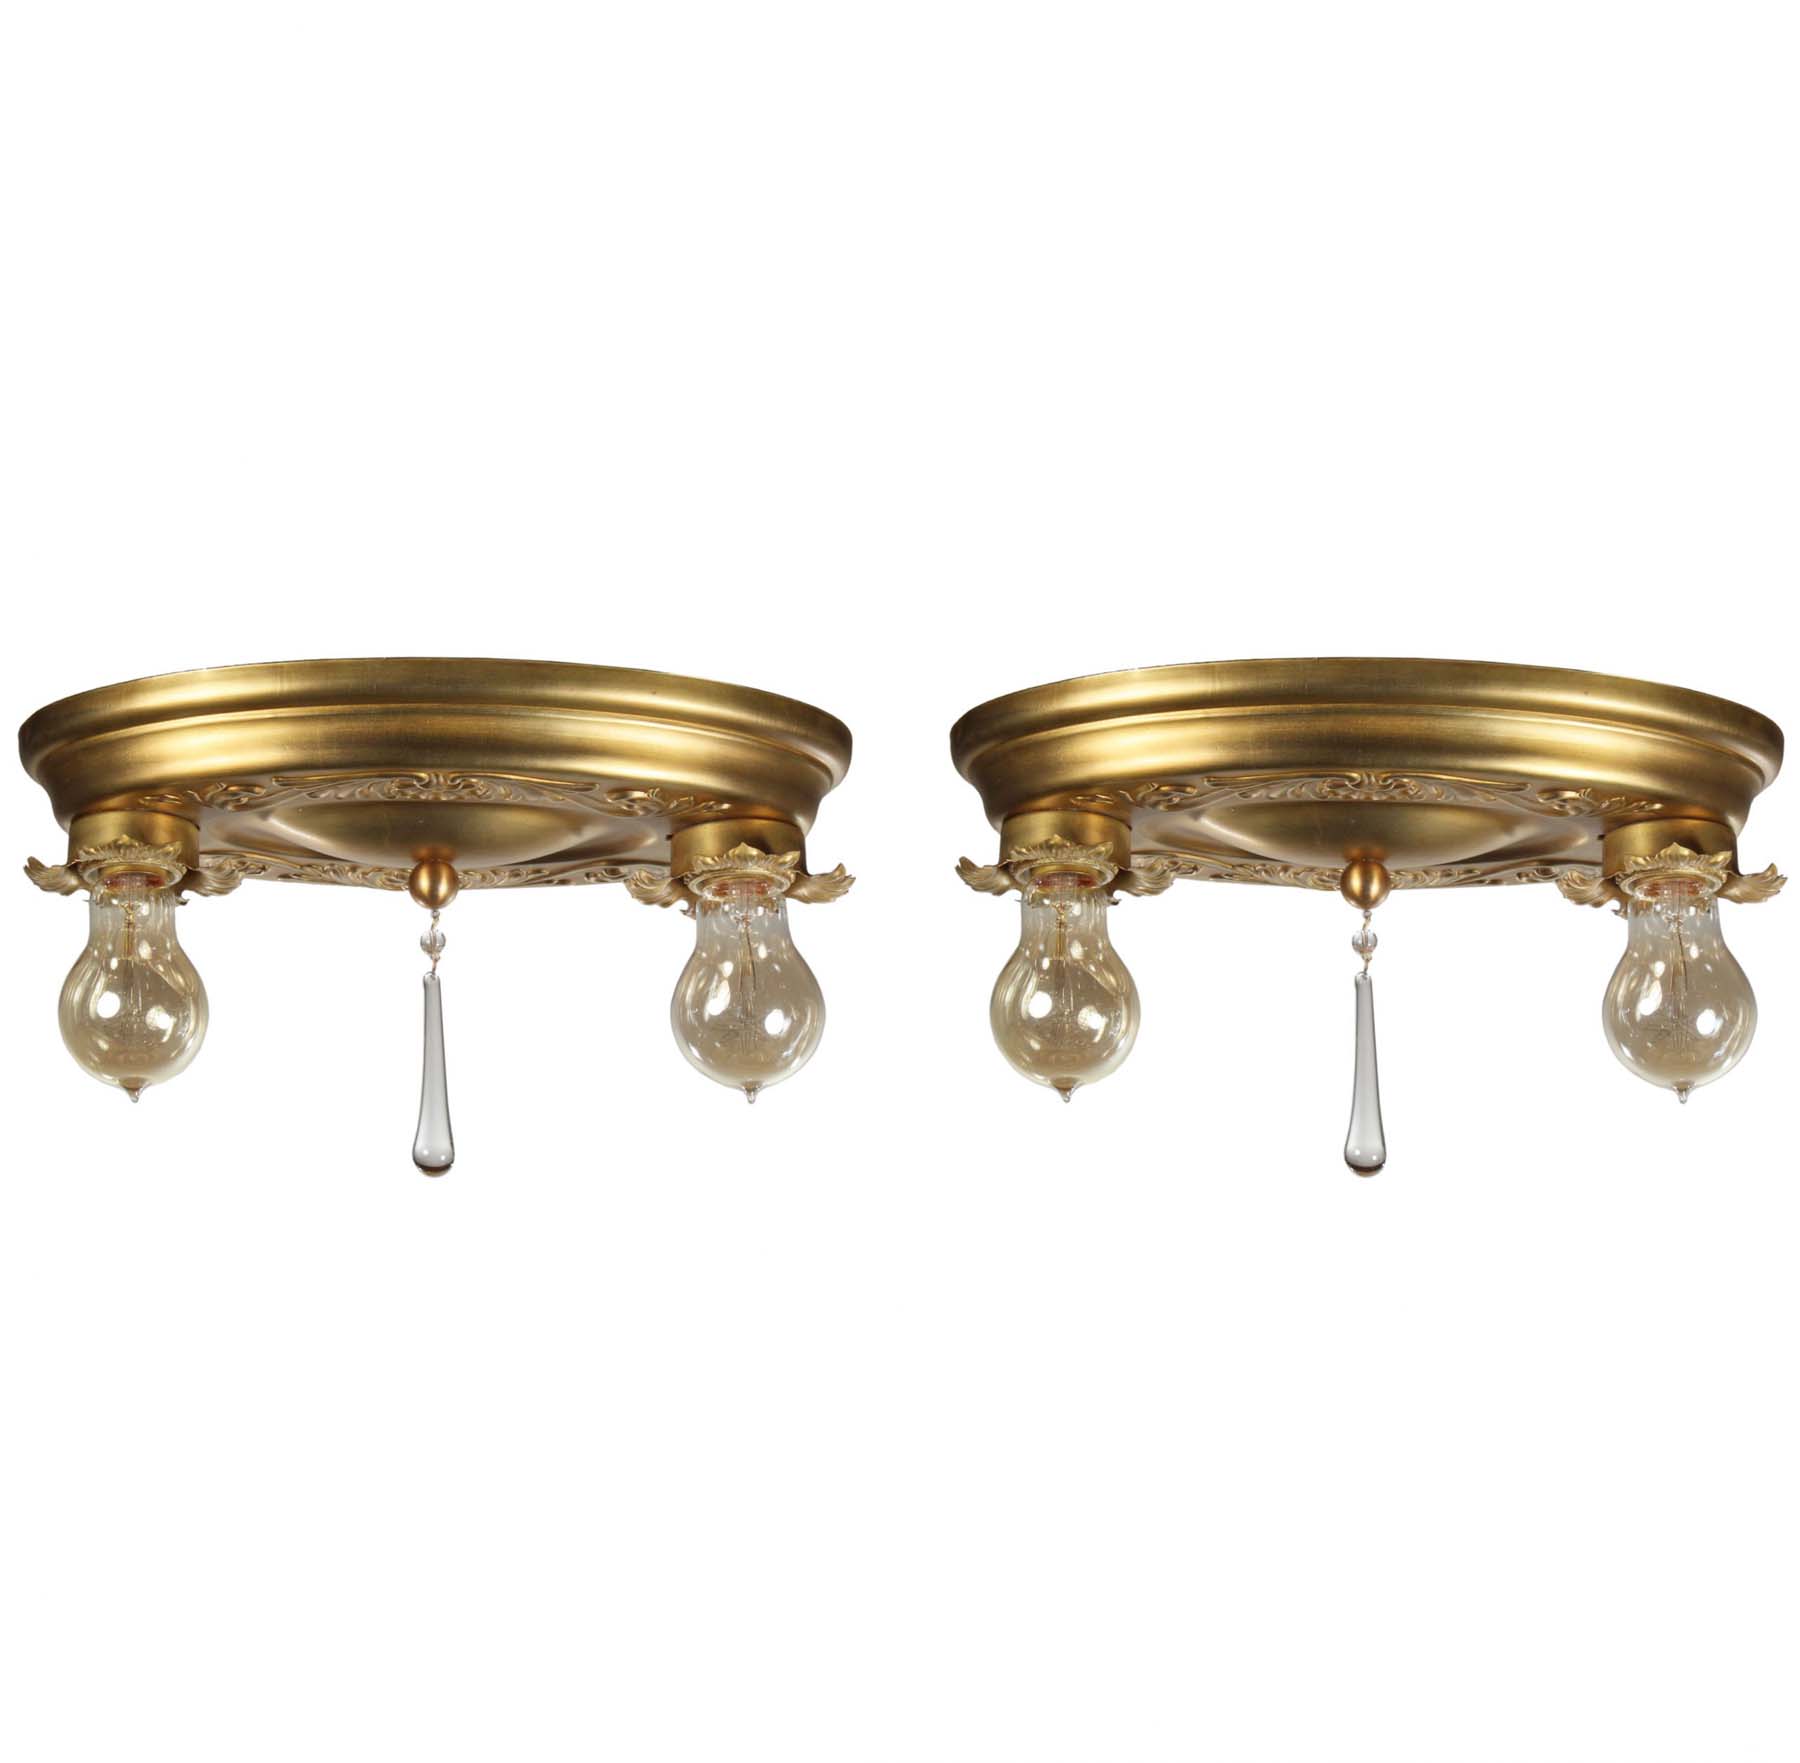 SOLD Neoclassical Flush Mount Fixtures in Brass, Antique Lighting-0